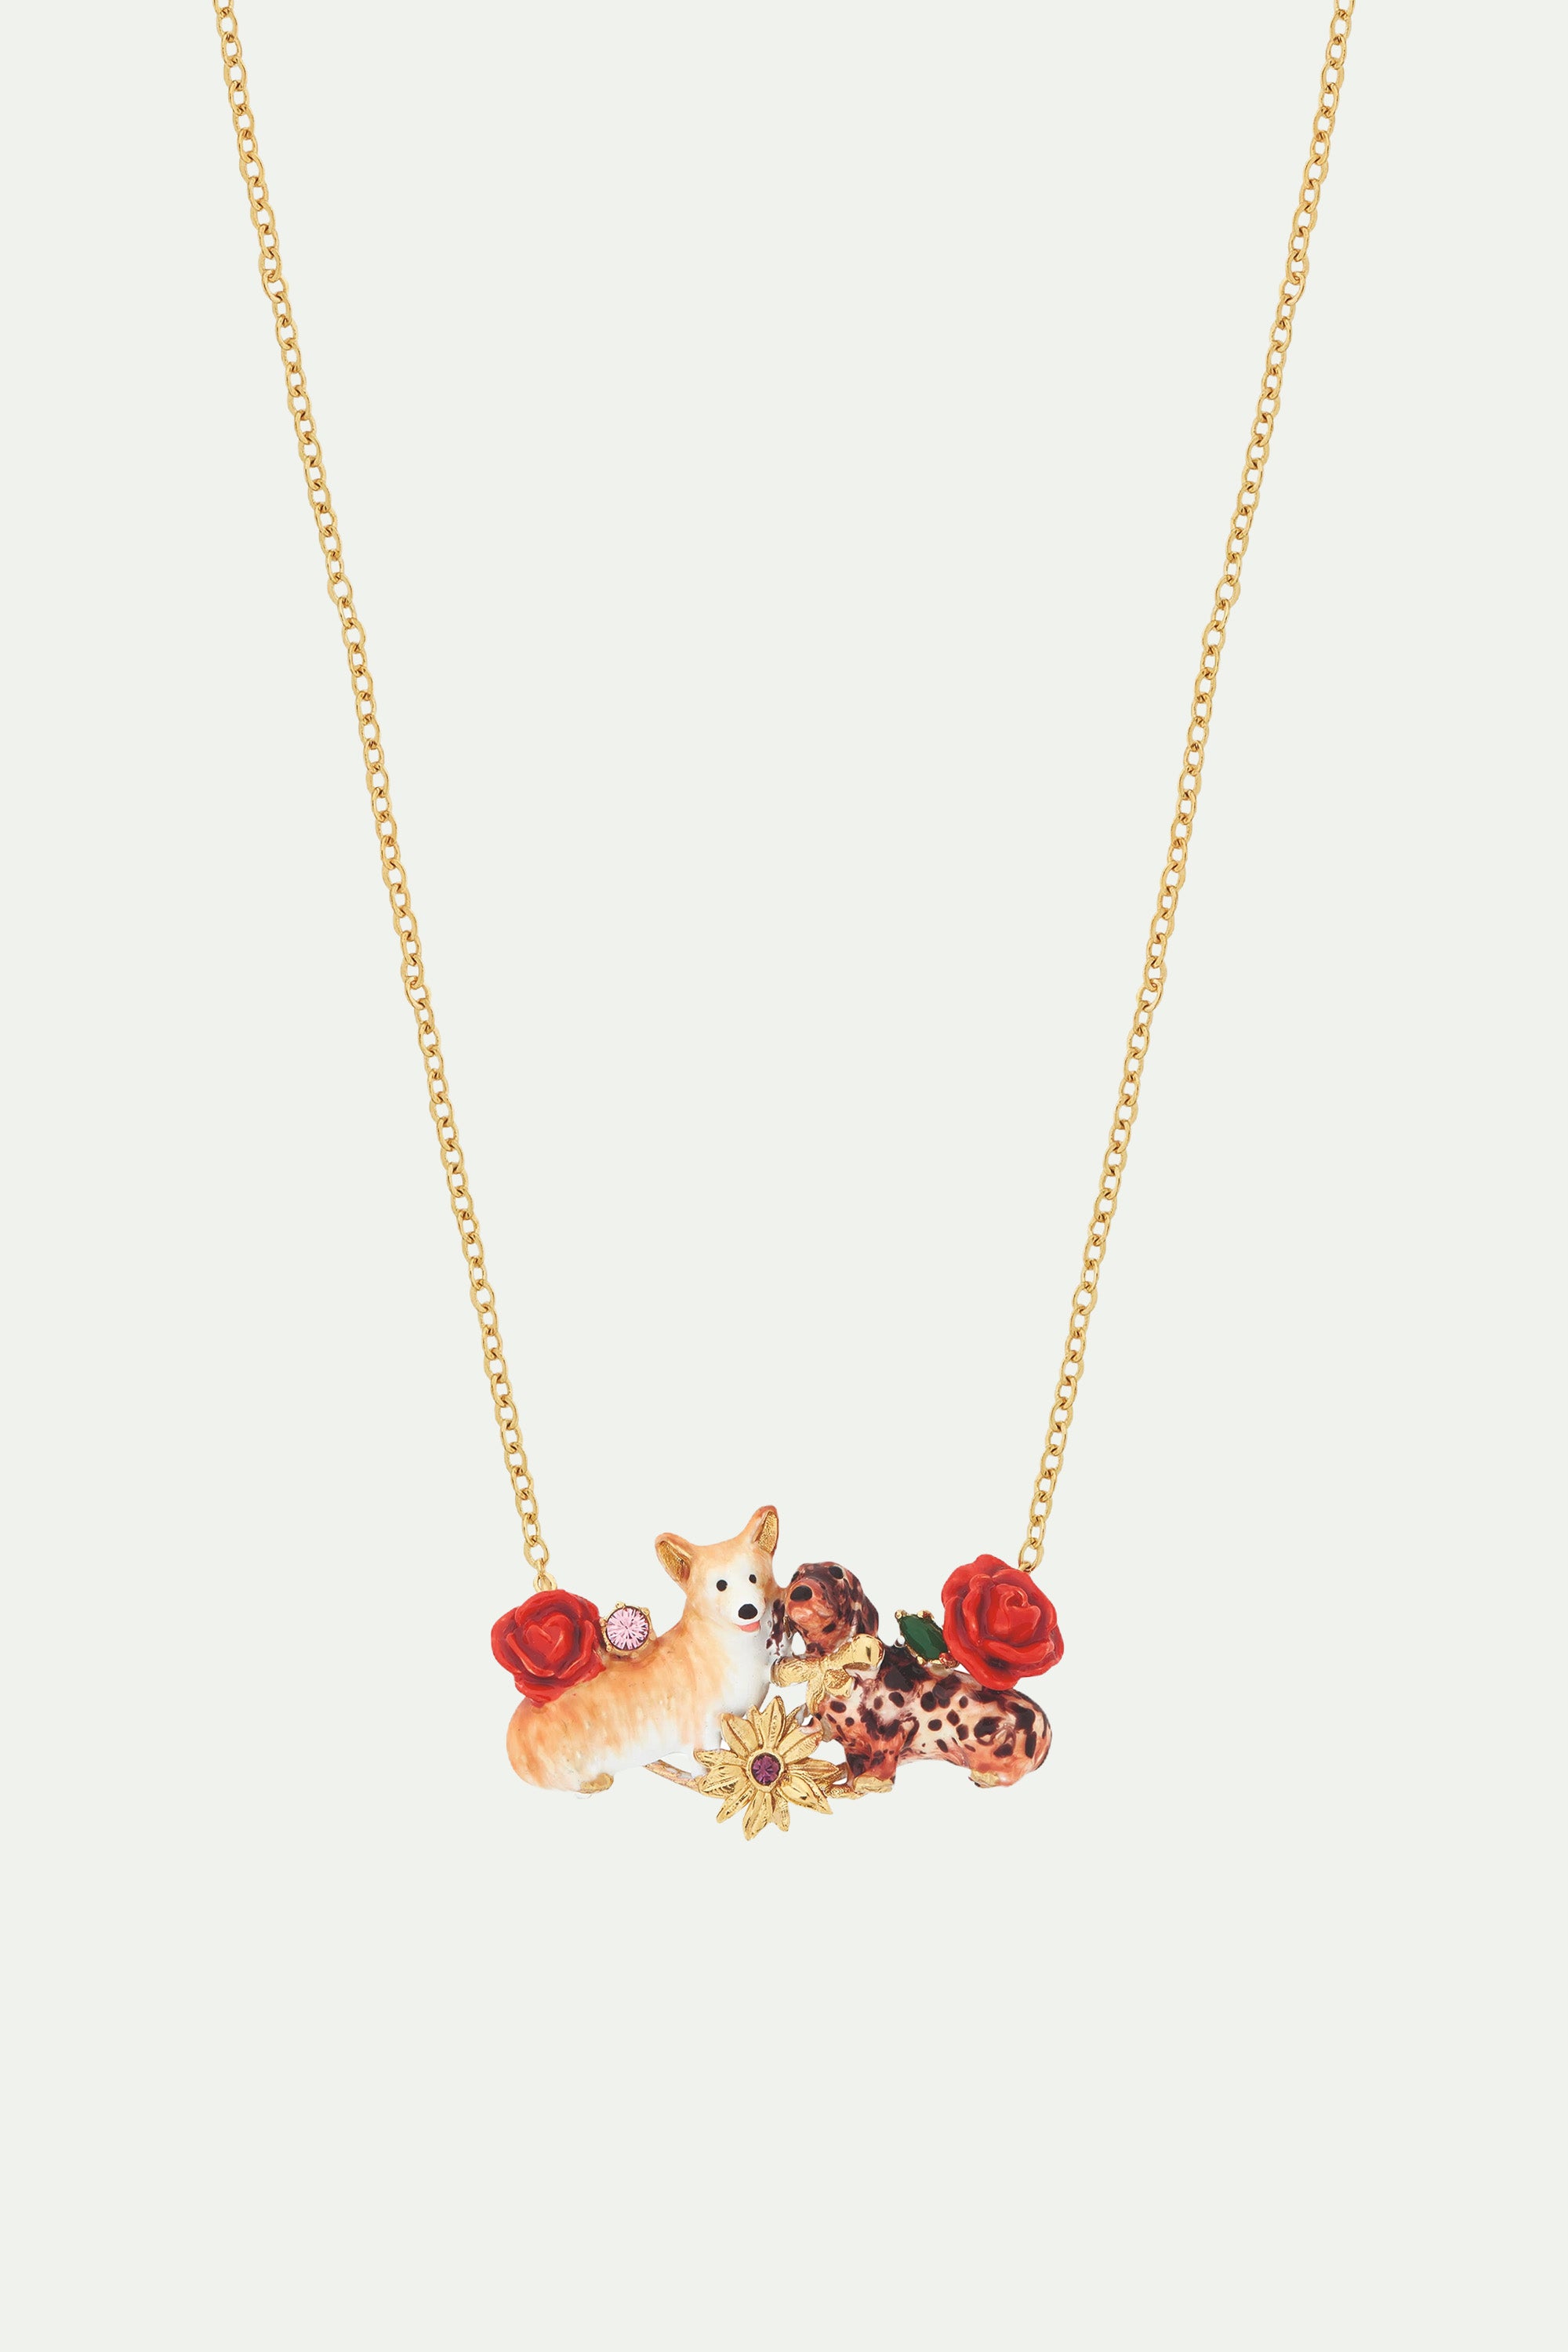 Corgi, dachshund and flower statement necklace